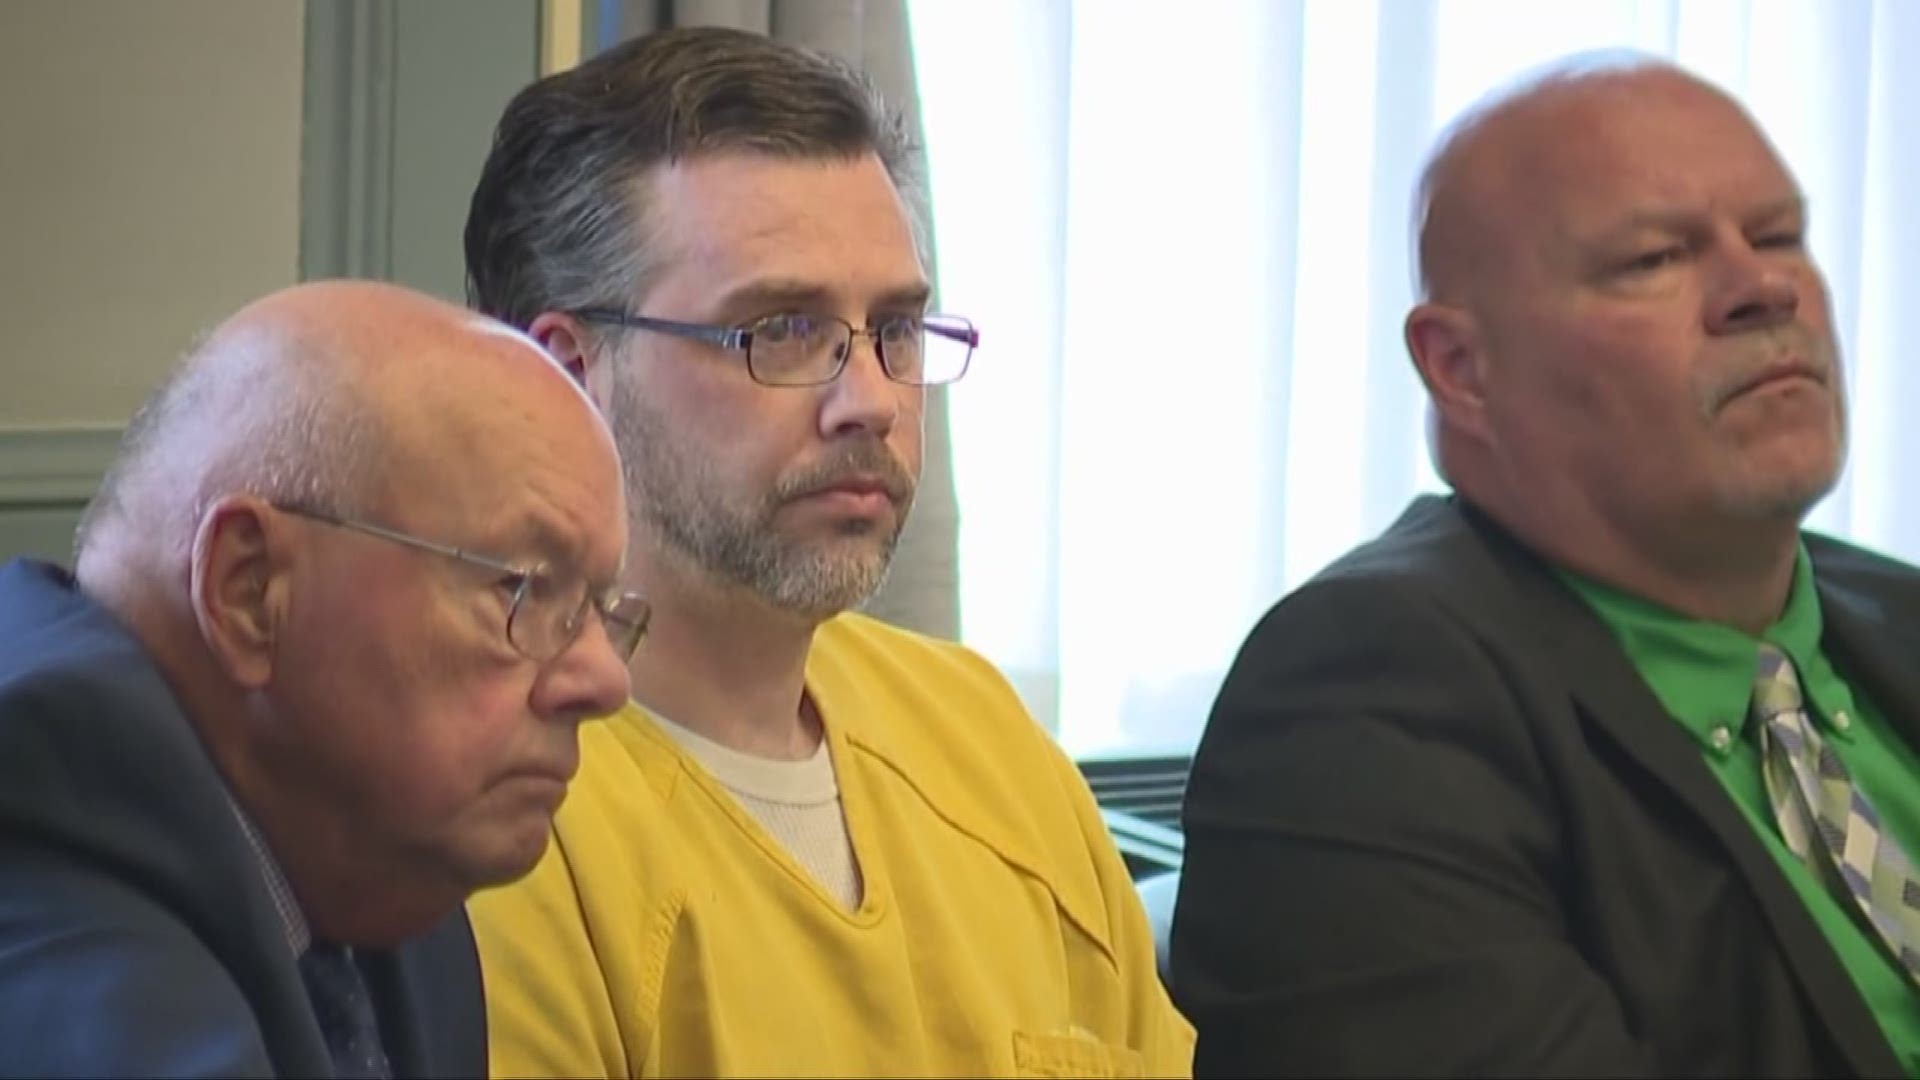 Ashland serial killer Shawn Grate sentenced to death